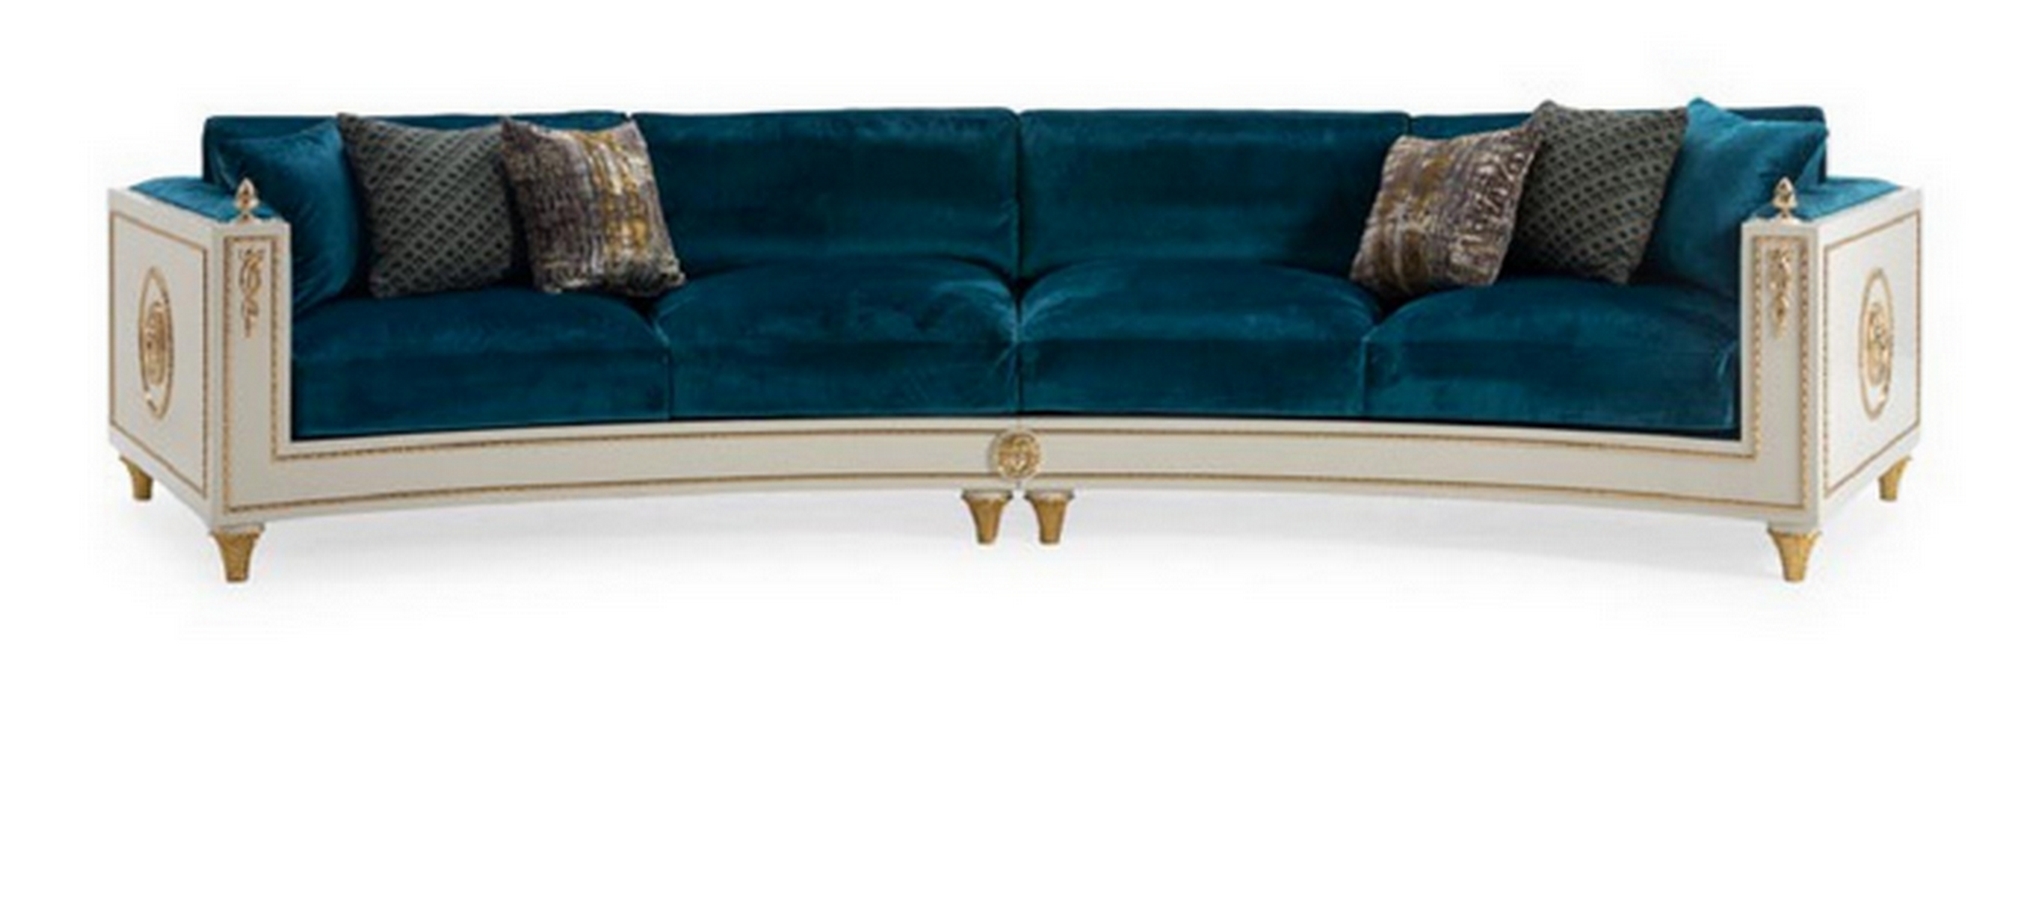 Ref Luxury baroque sofa 4 seater